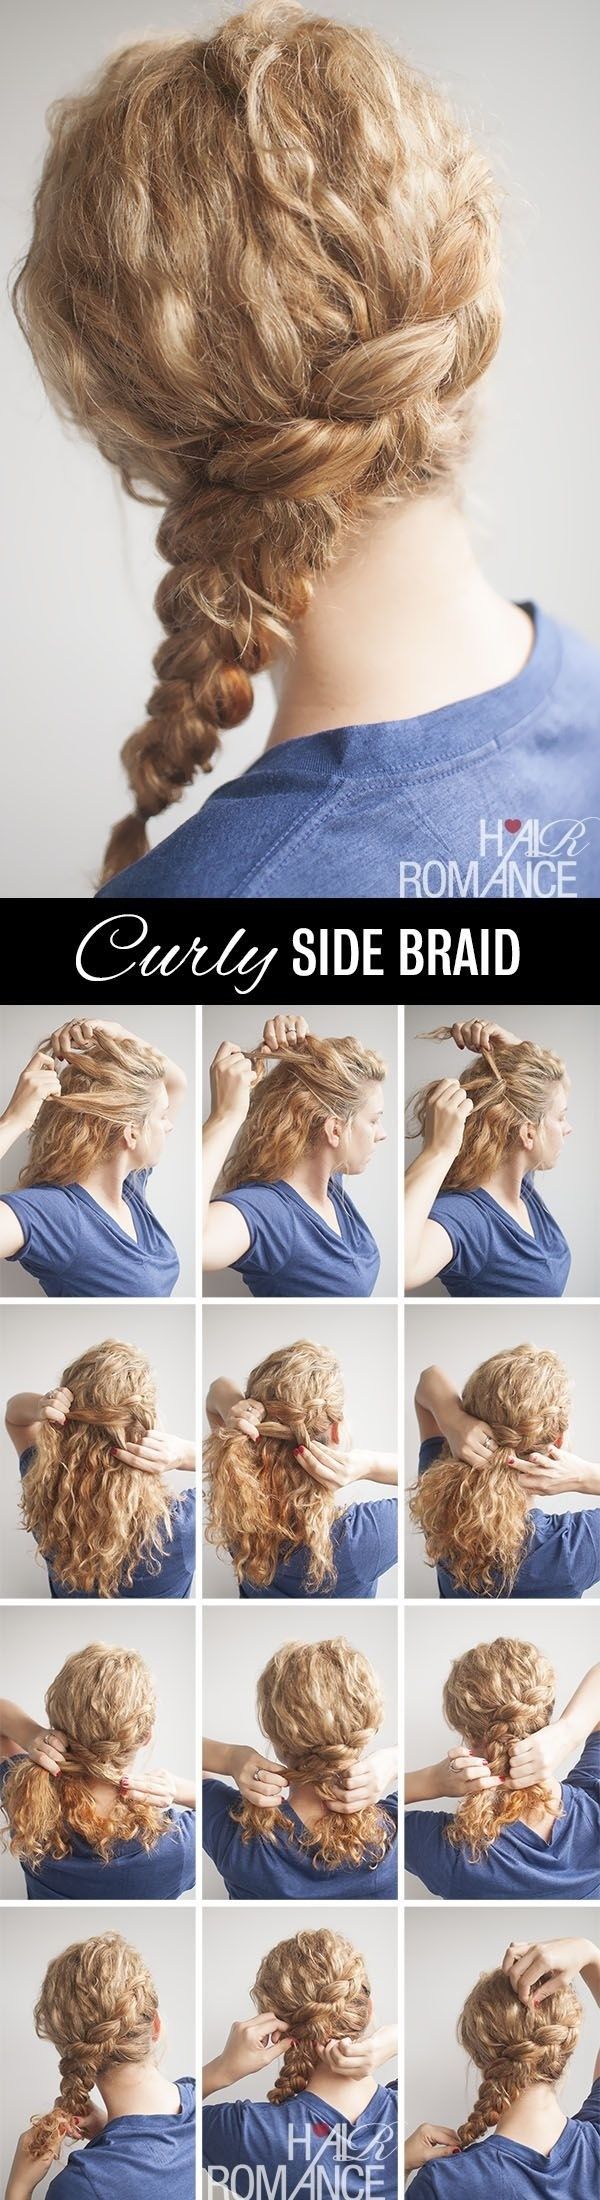 10 Trendy Side Braid Hairstyles for Long Hair